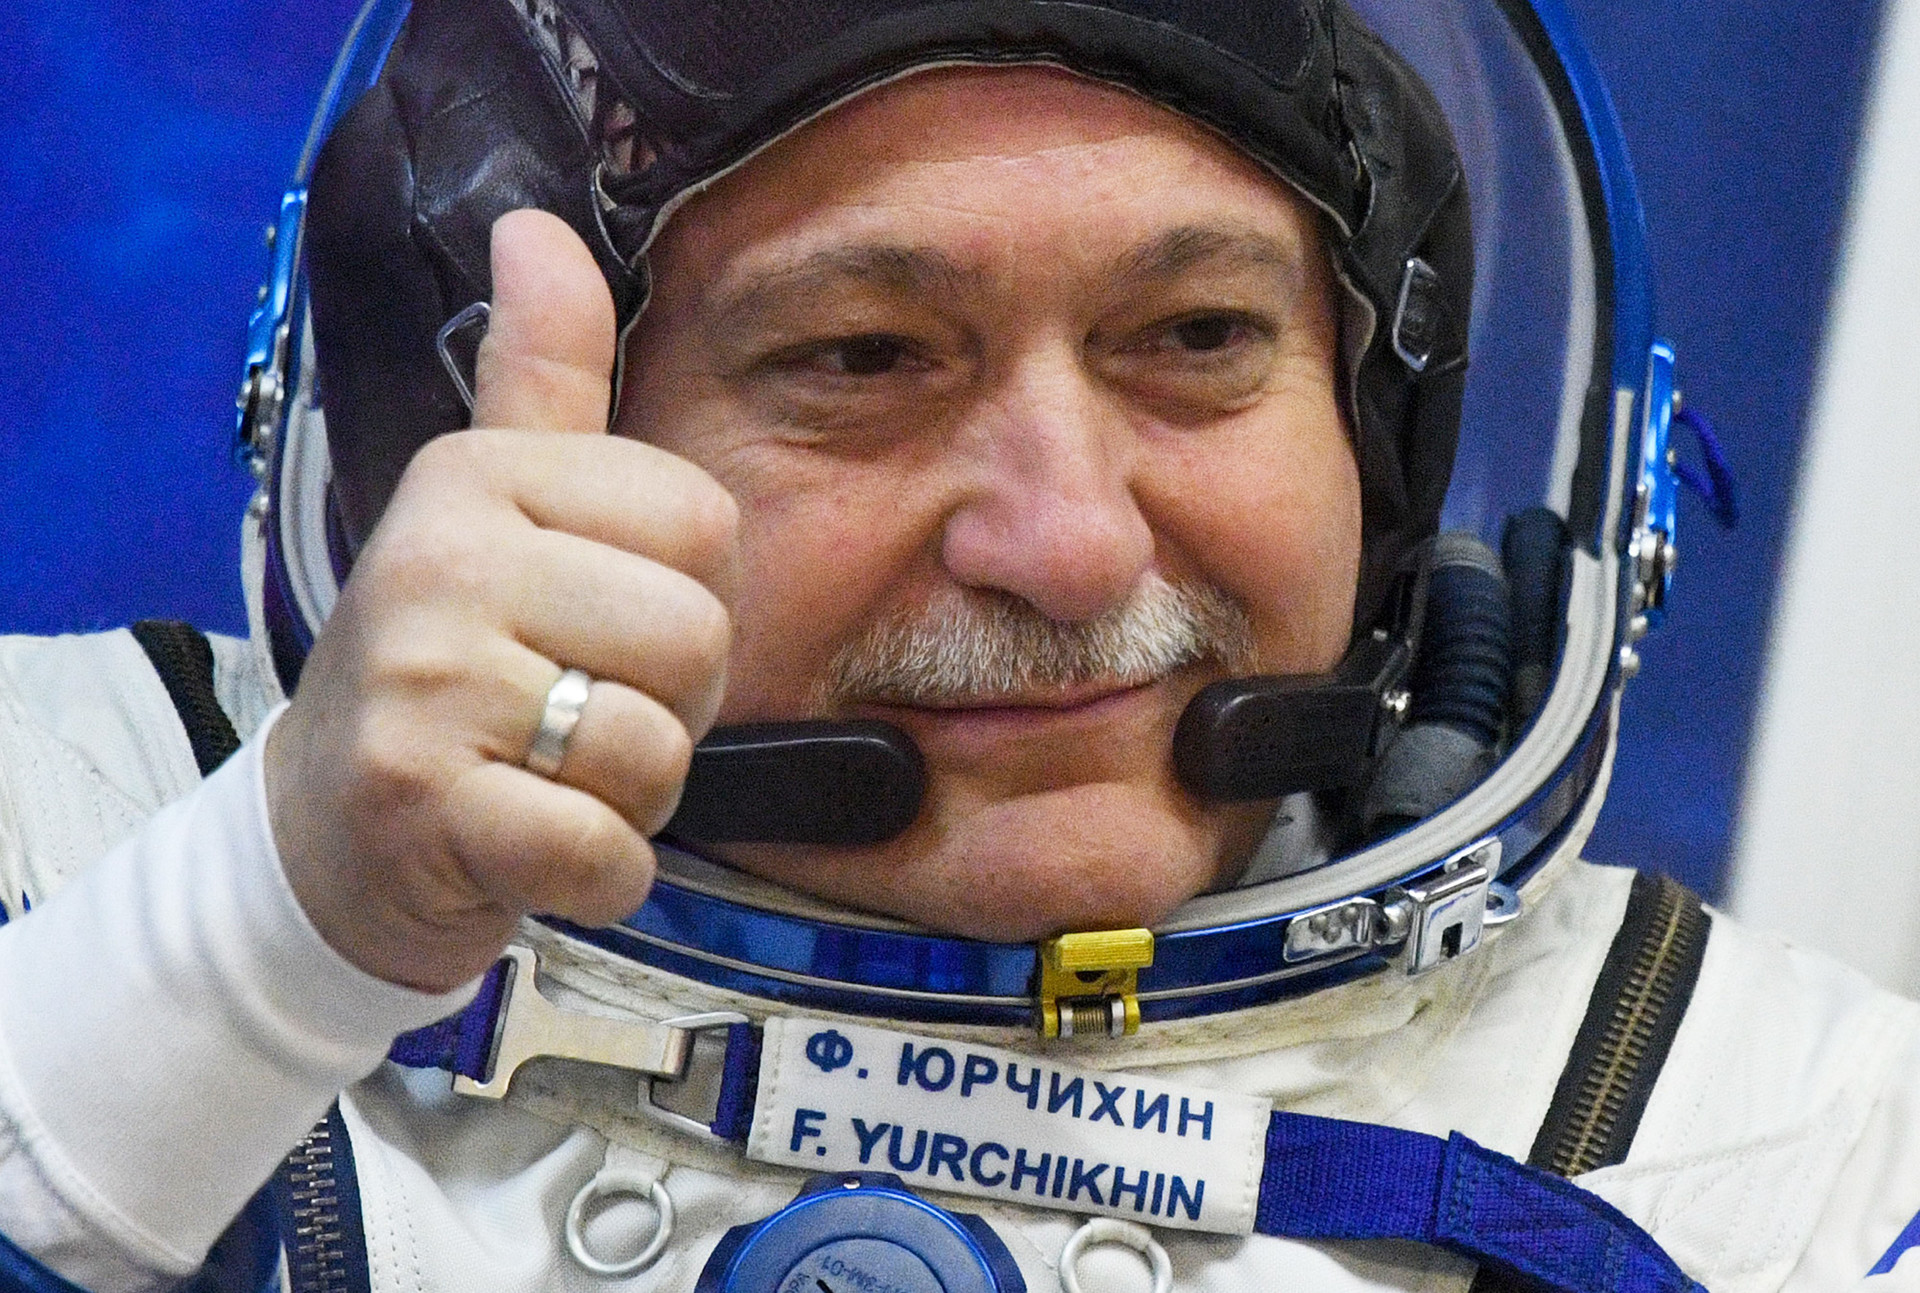 Cosmonaut Fyodor Yurchikhin before the rocket launch, April 2017